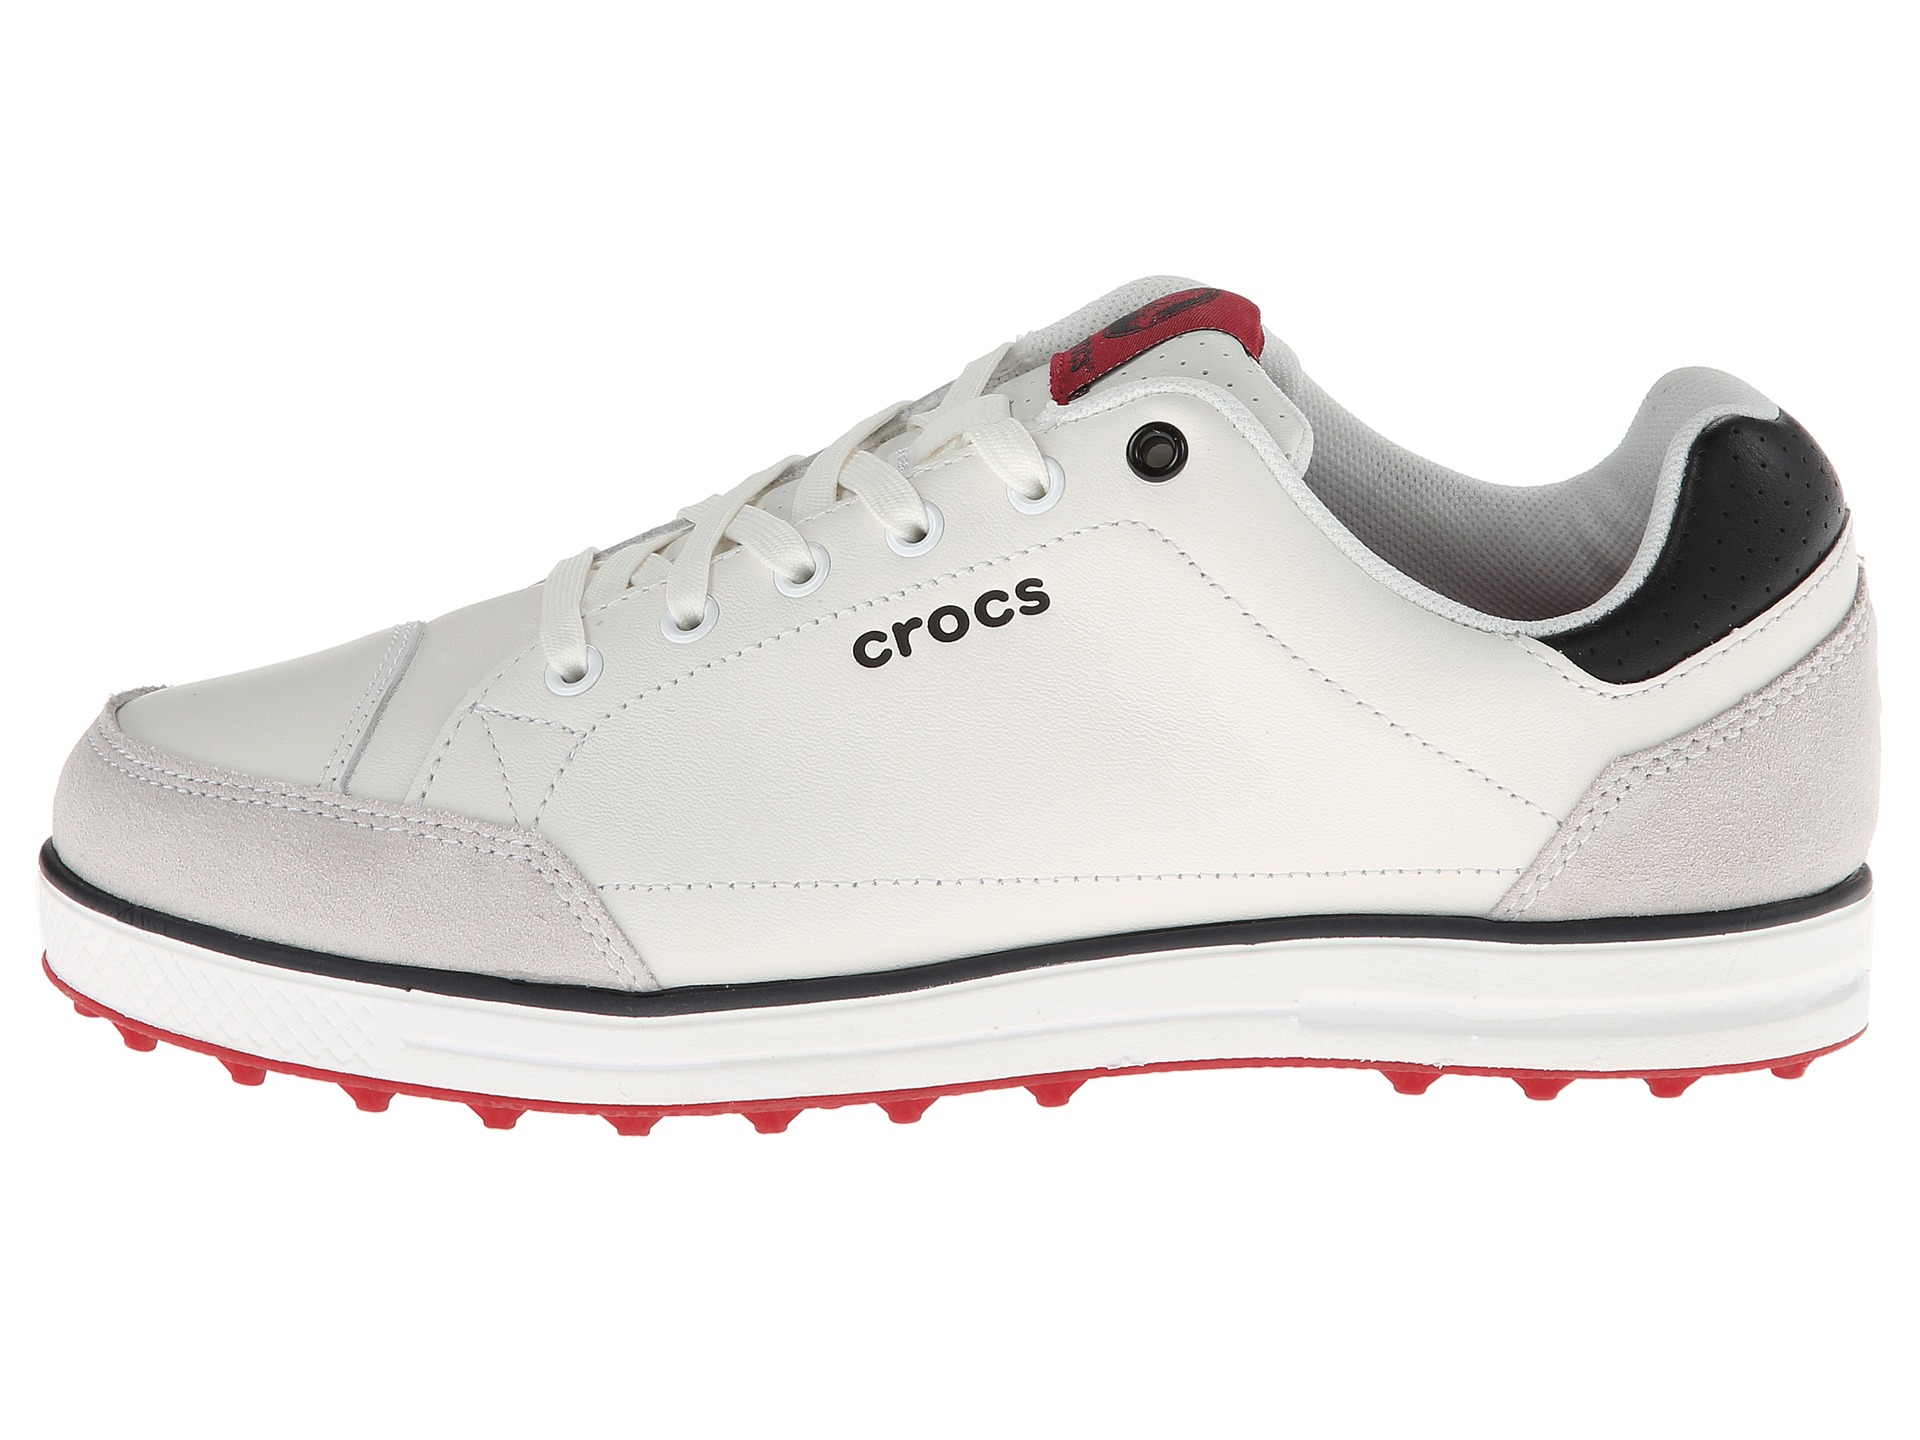 Crocs Karlson Golf Shoe M White True Red | Shipped Free at Zappos